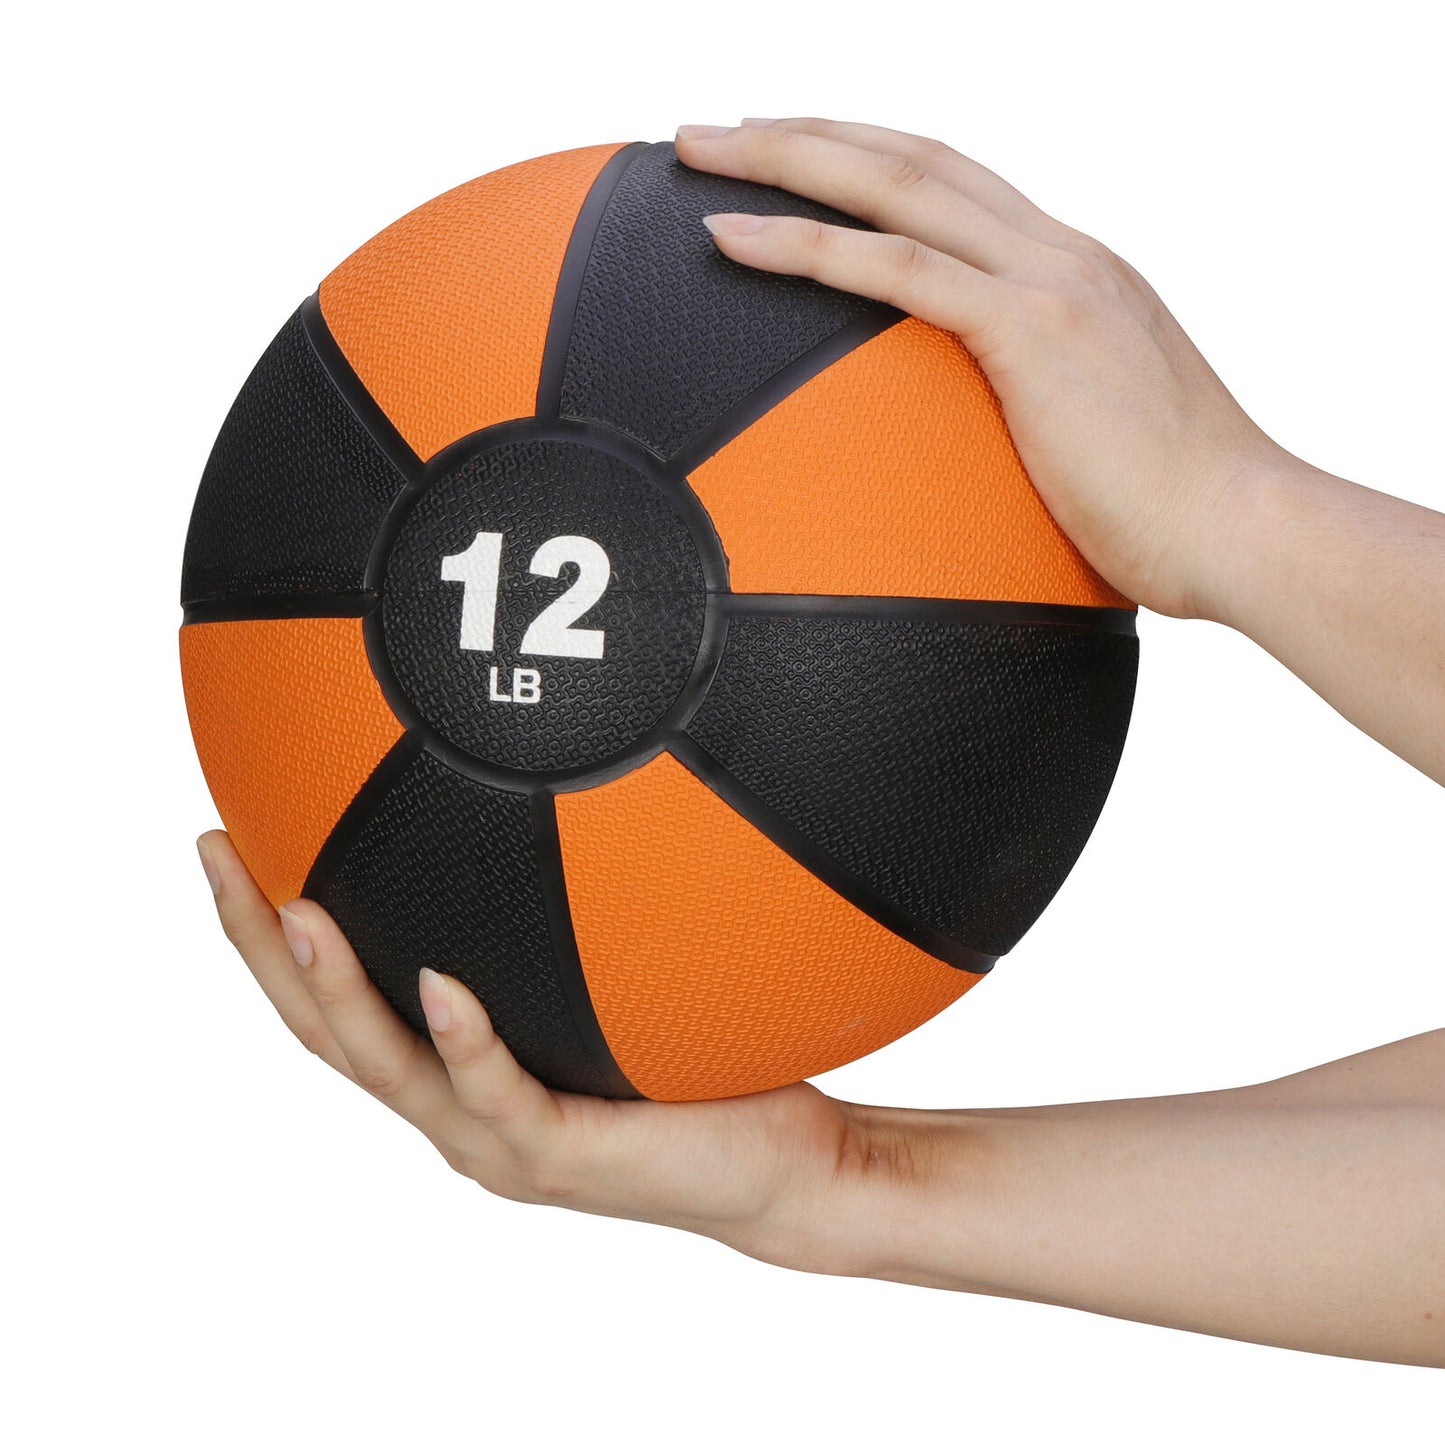 12lb Body Sport Exercise  Medicine Ball for Home Gym Balance Stability Pilates